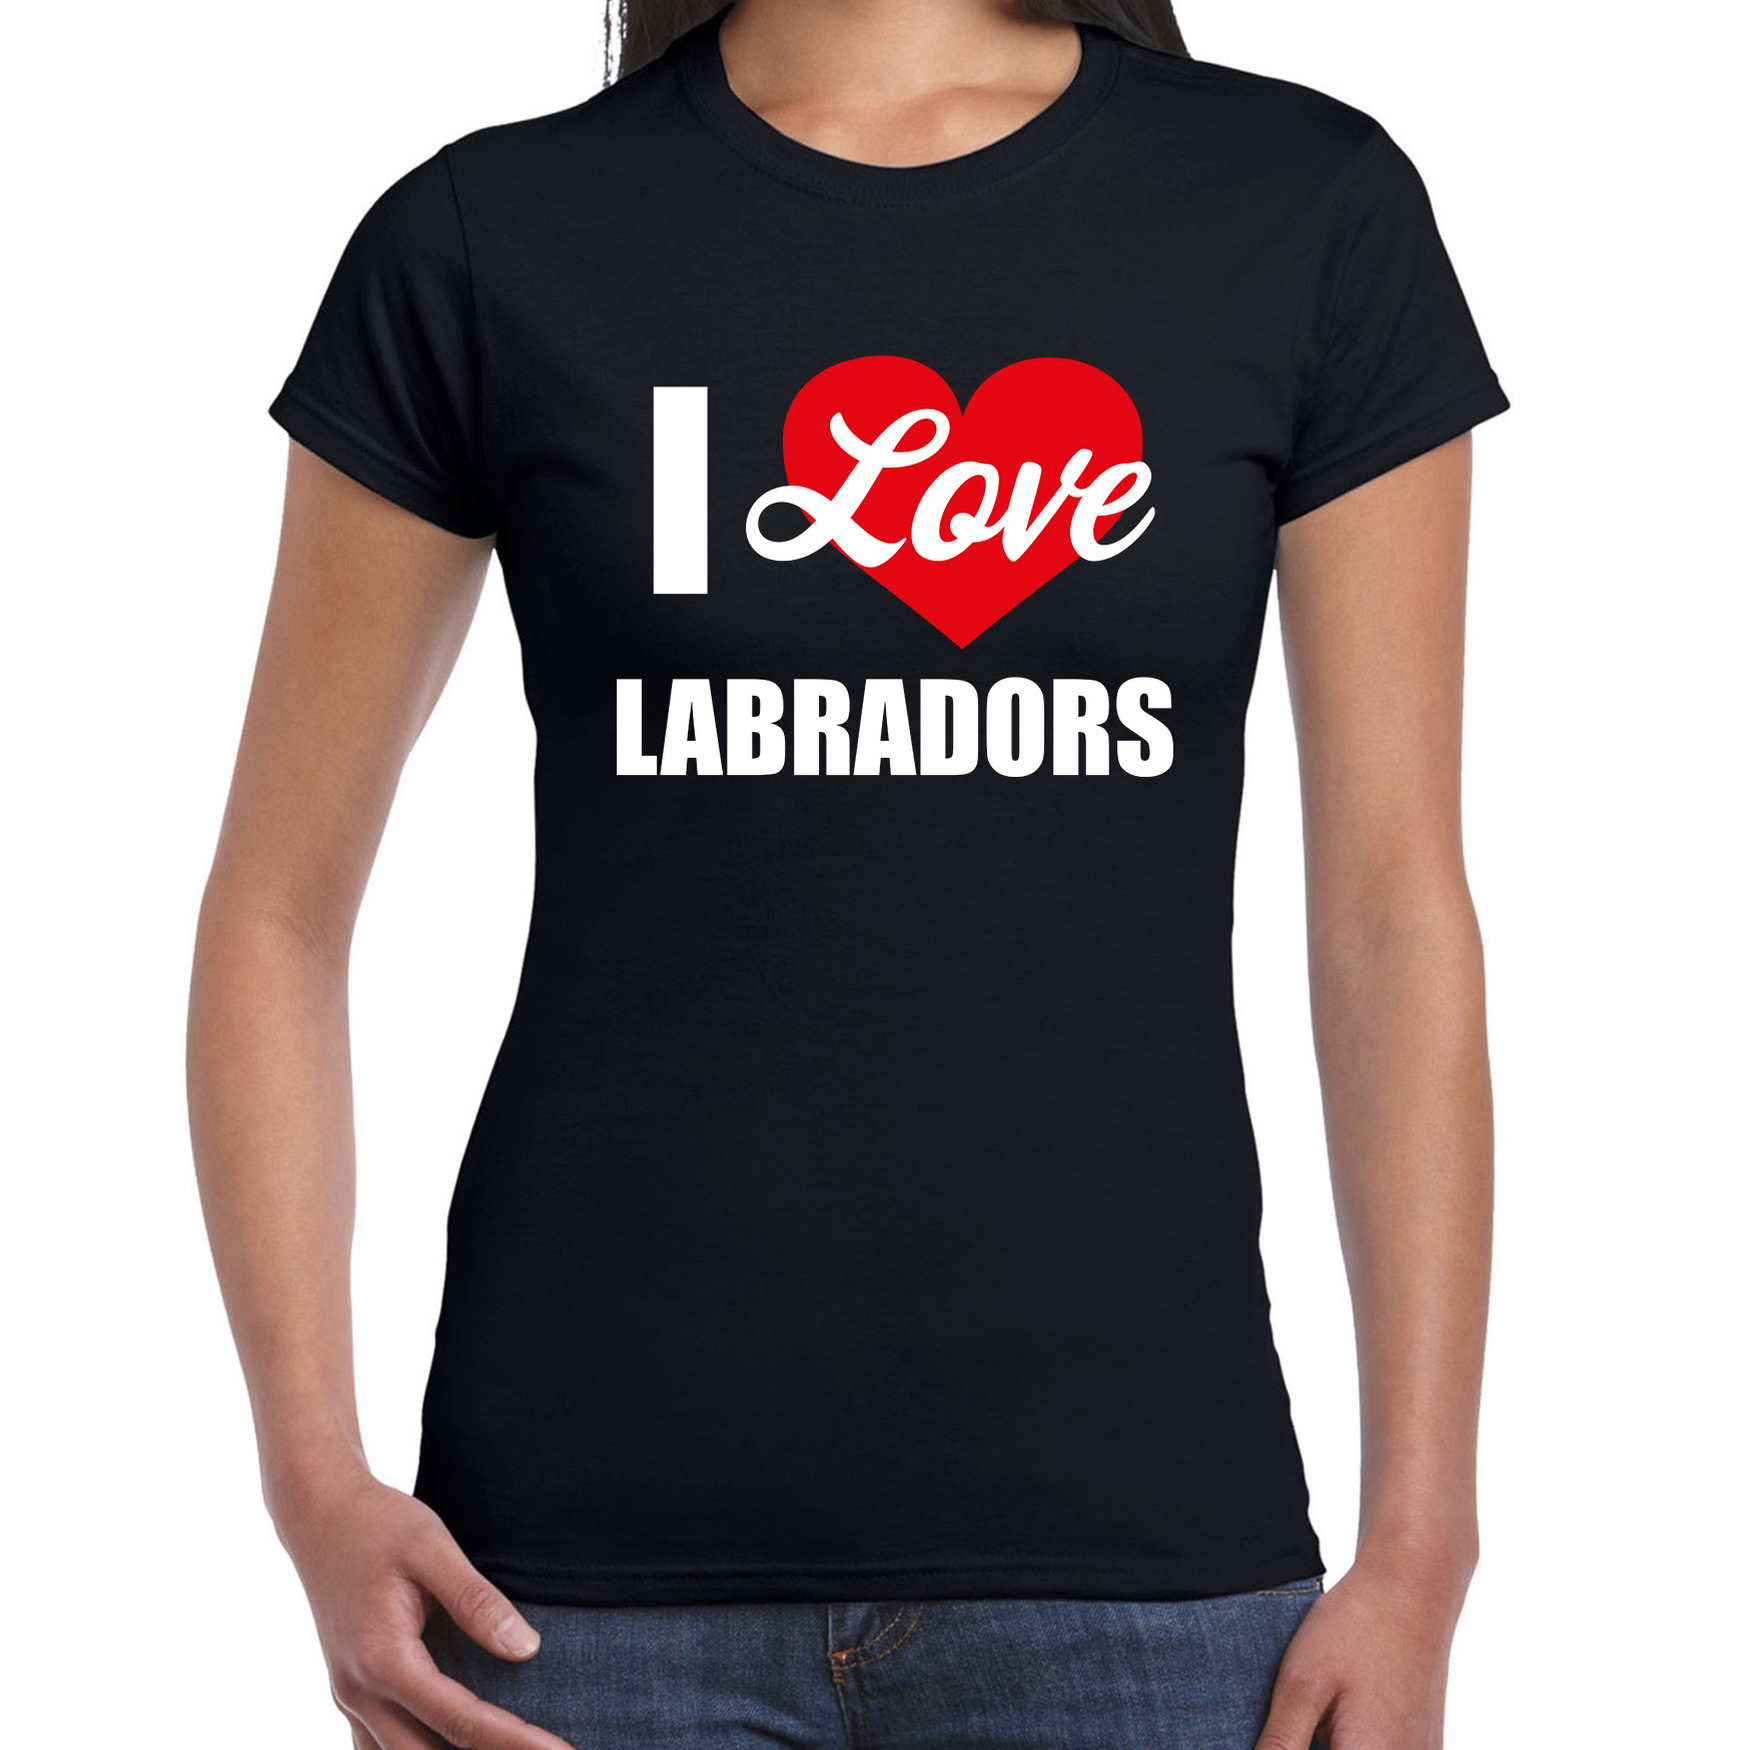 I love Labradors honden t-shirt zwart voor dames